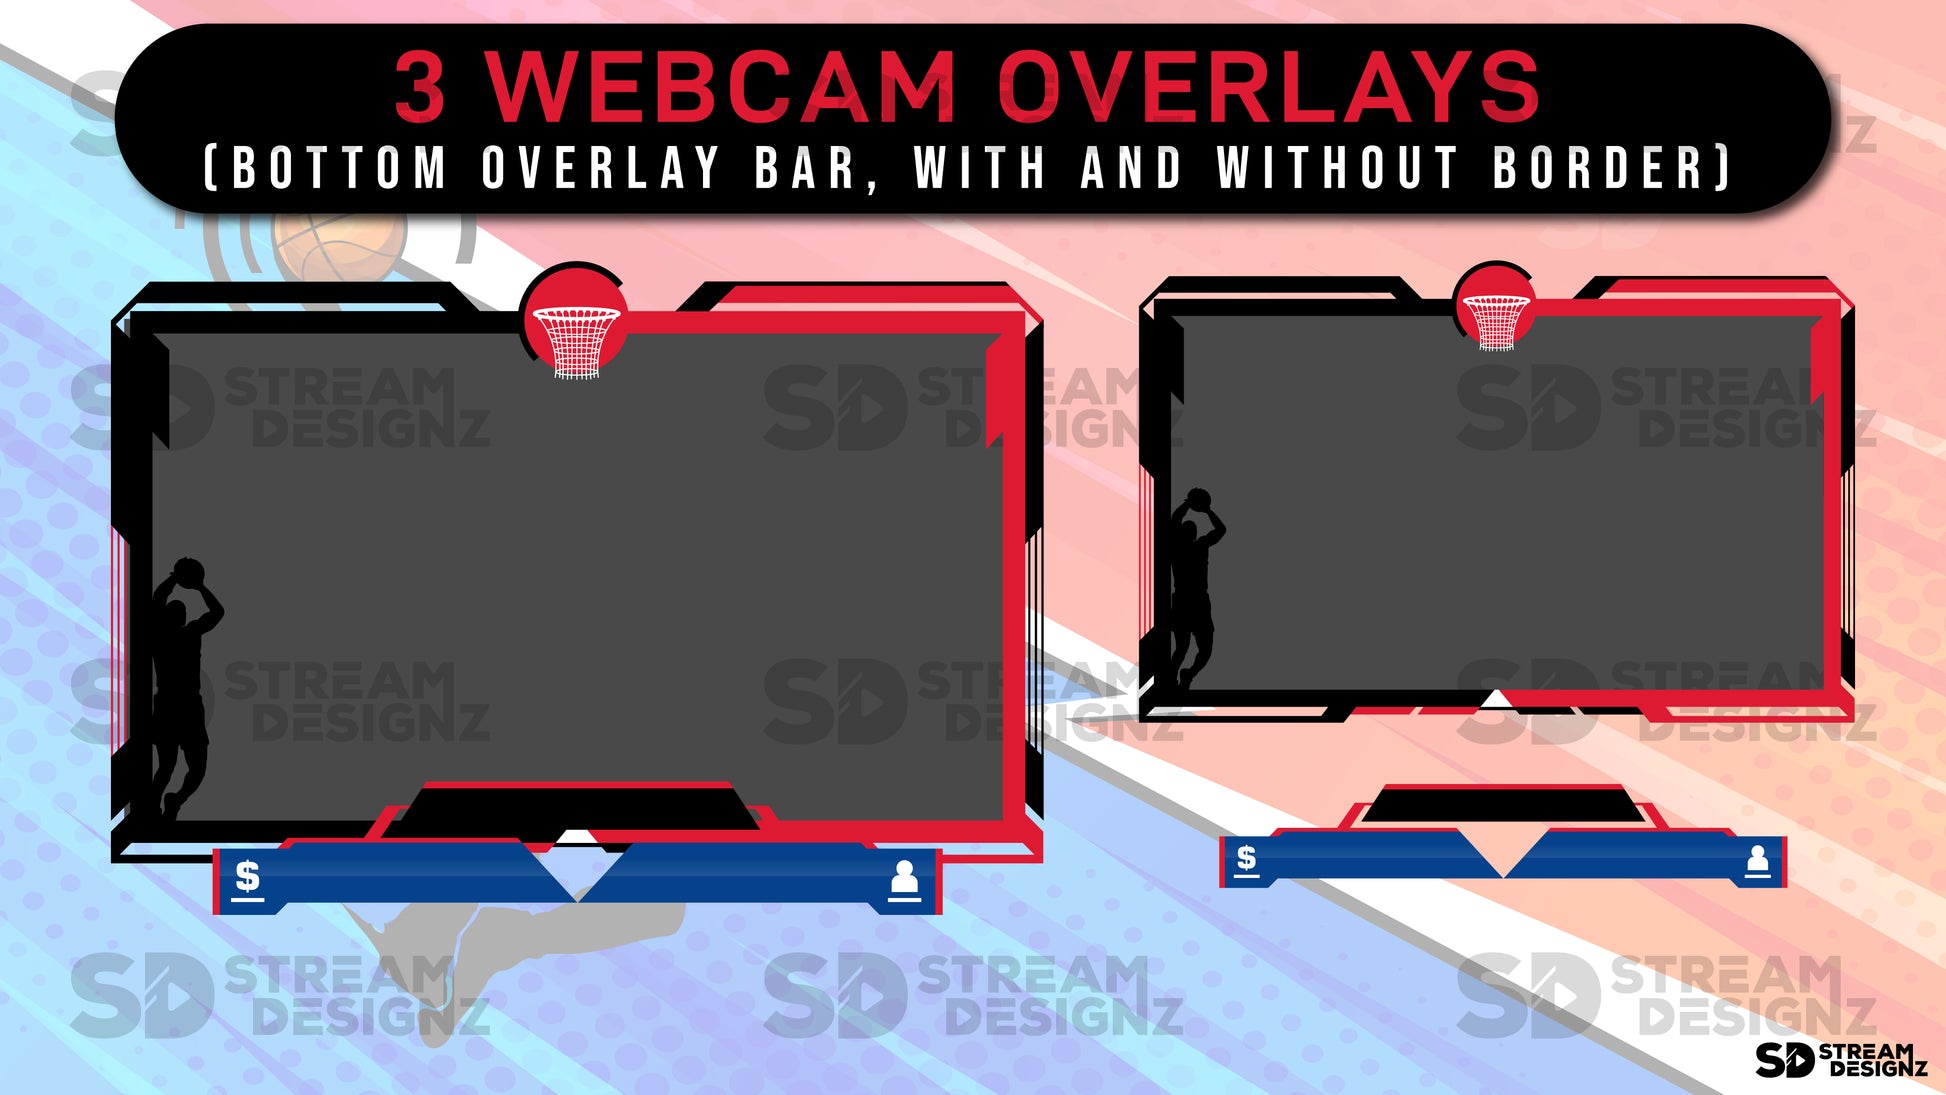 animated stream overlay package buckets 3 webcam overlays stream designz